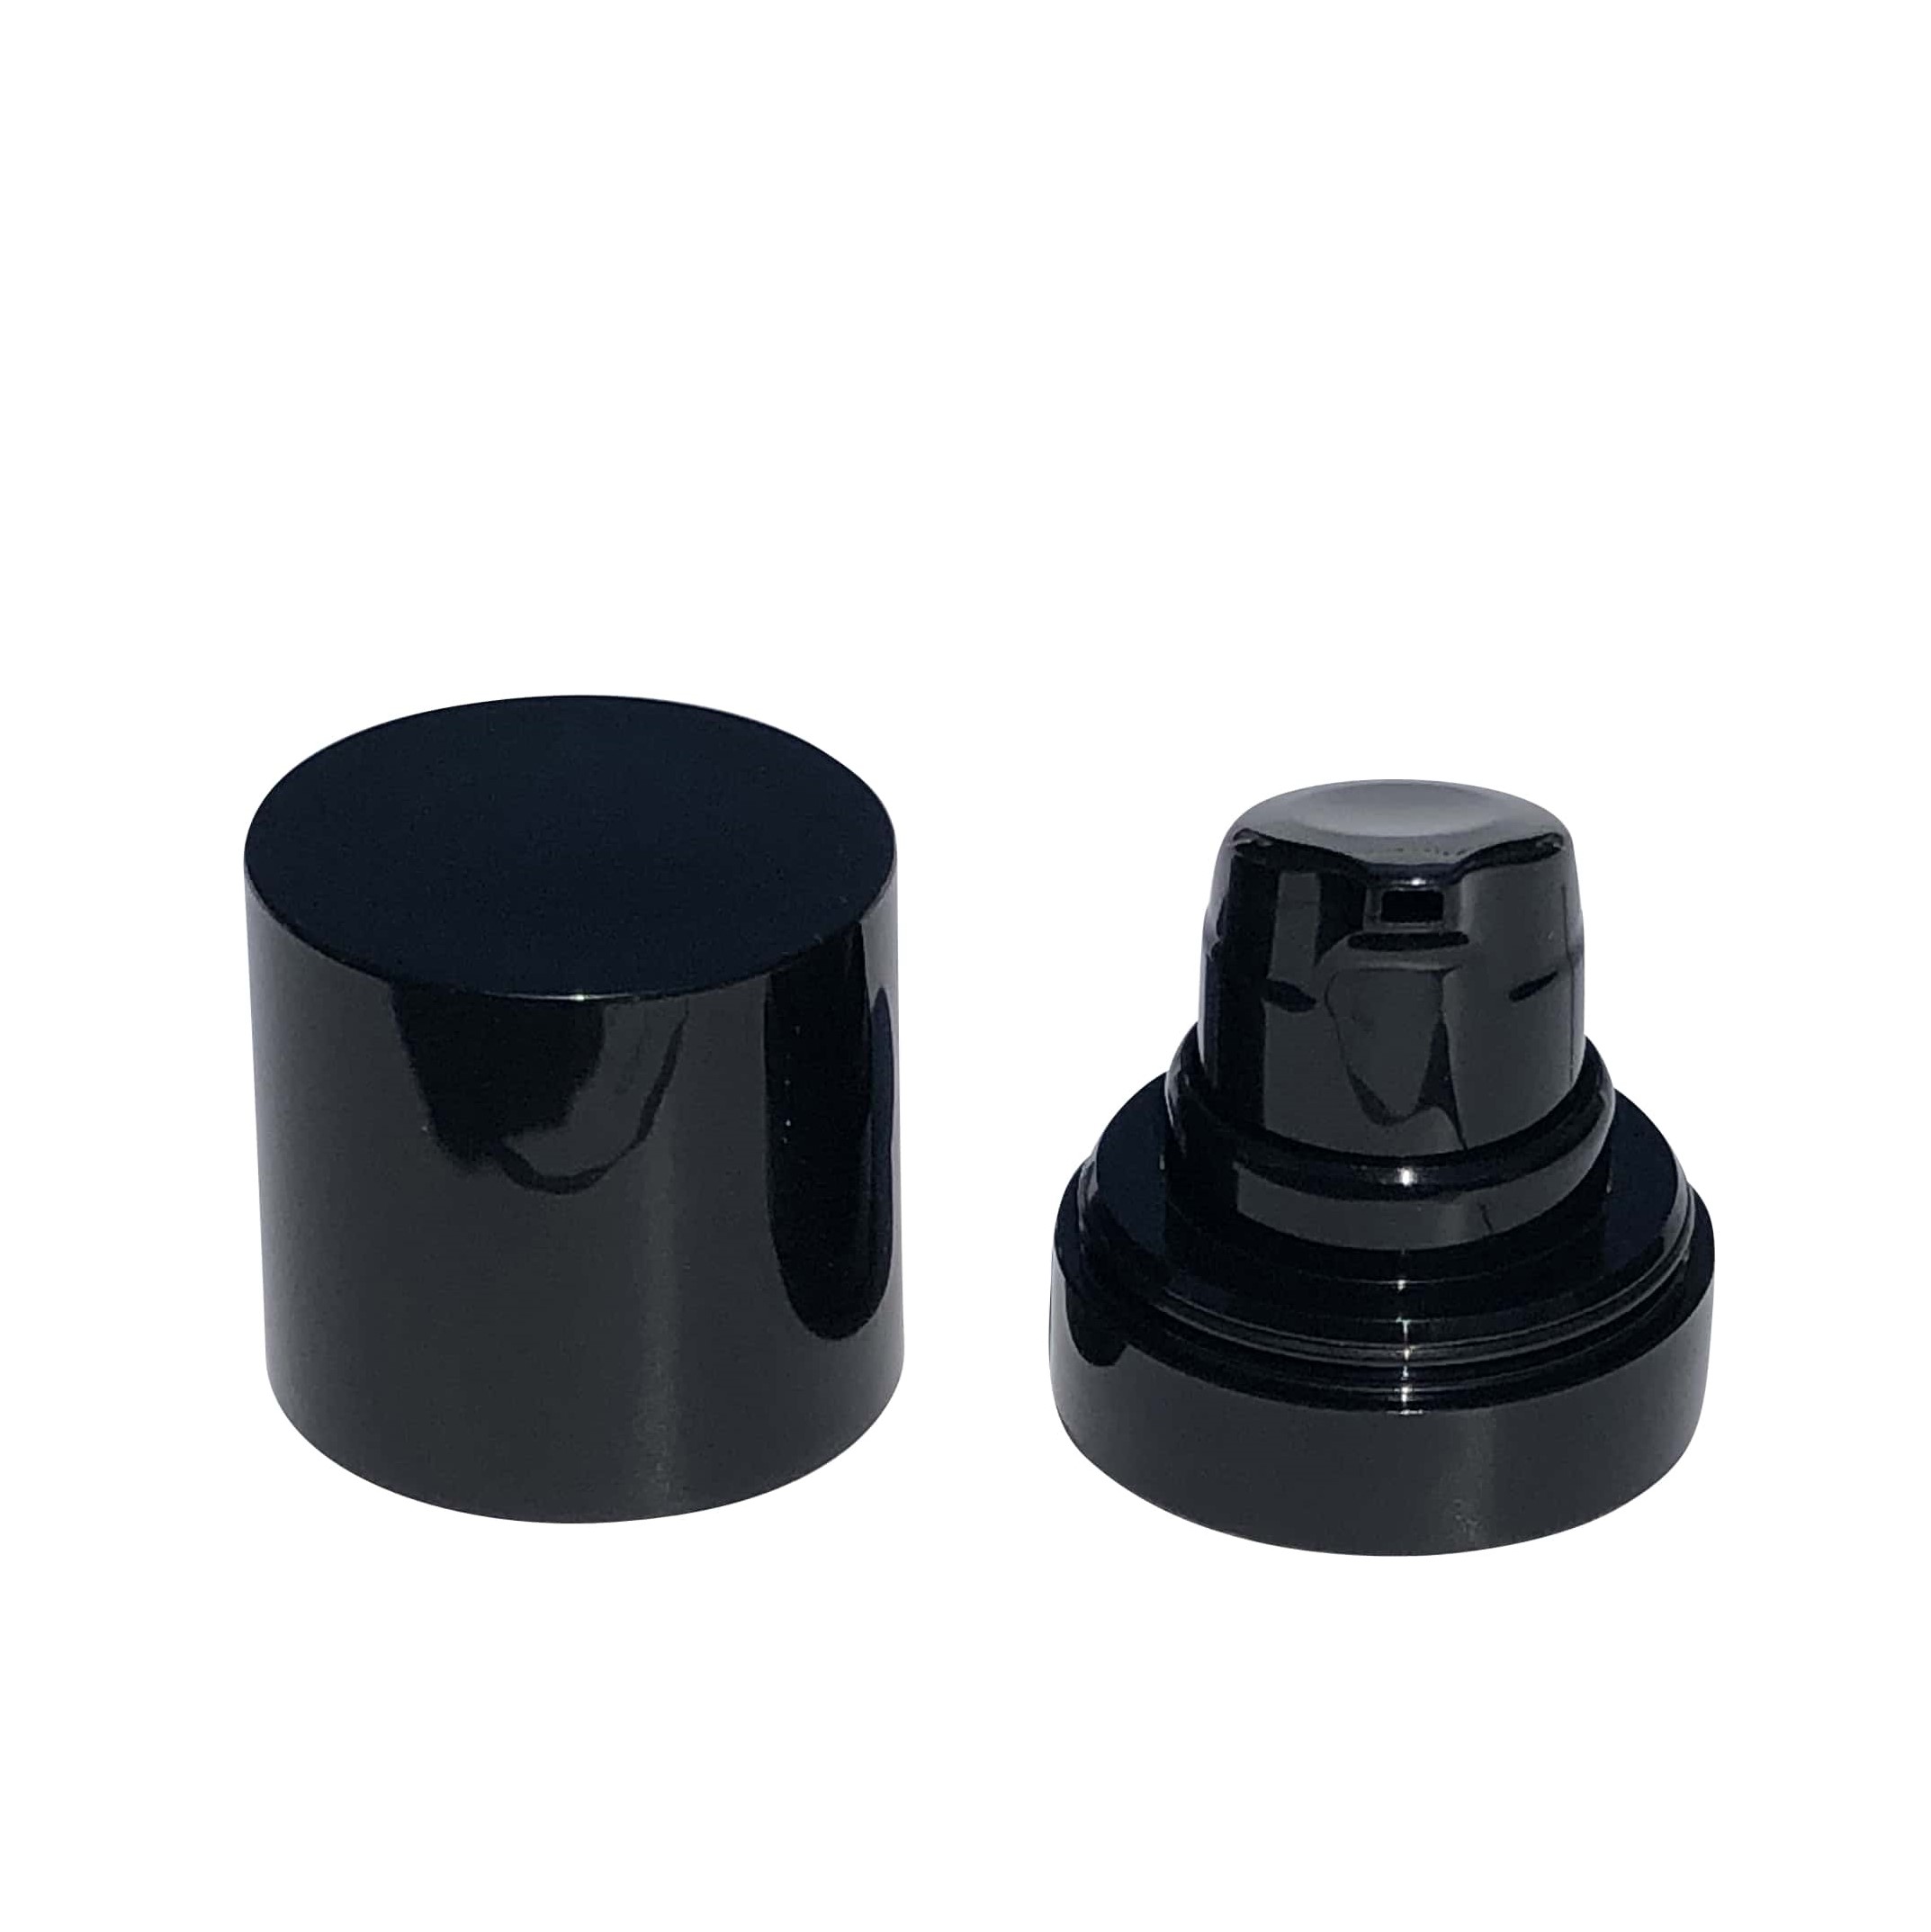 Airless dispenser pump head 'Micro', PP plastic, black